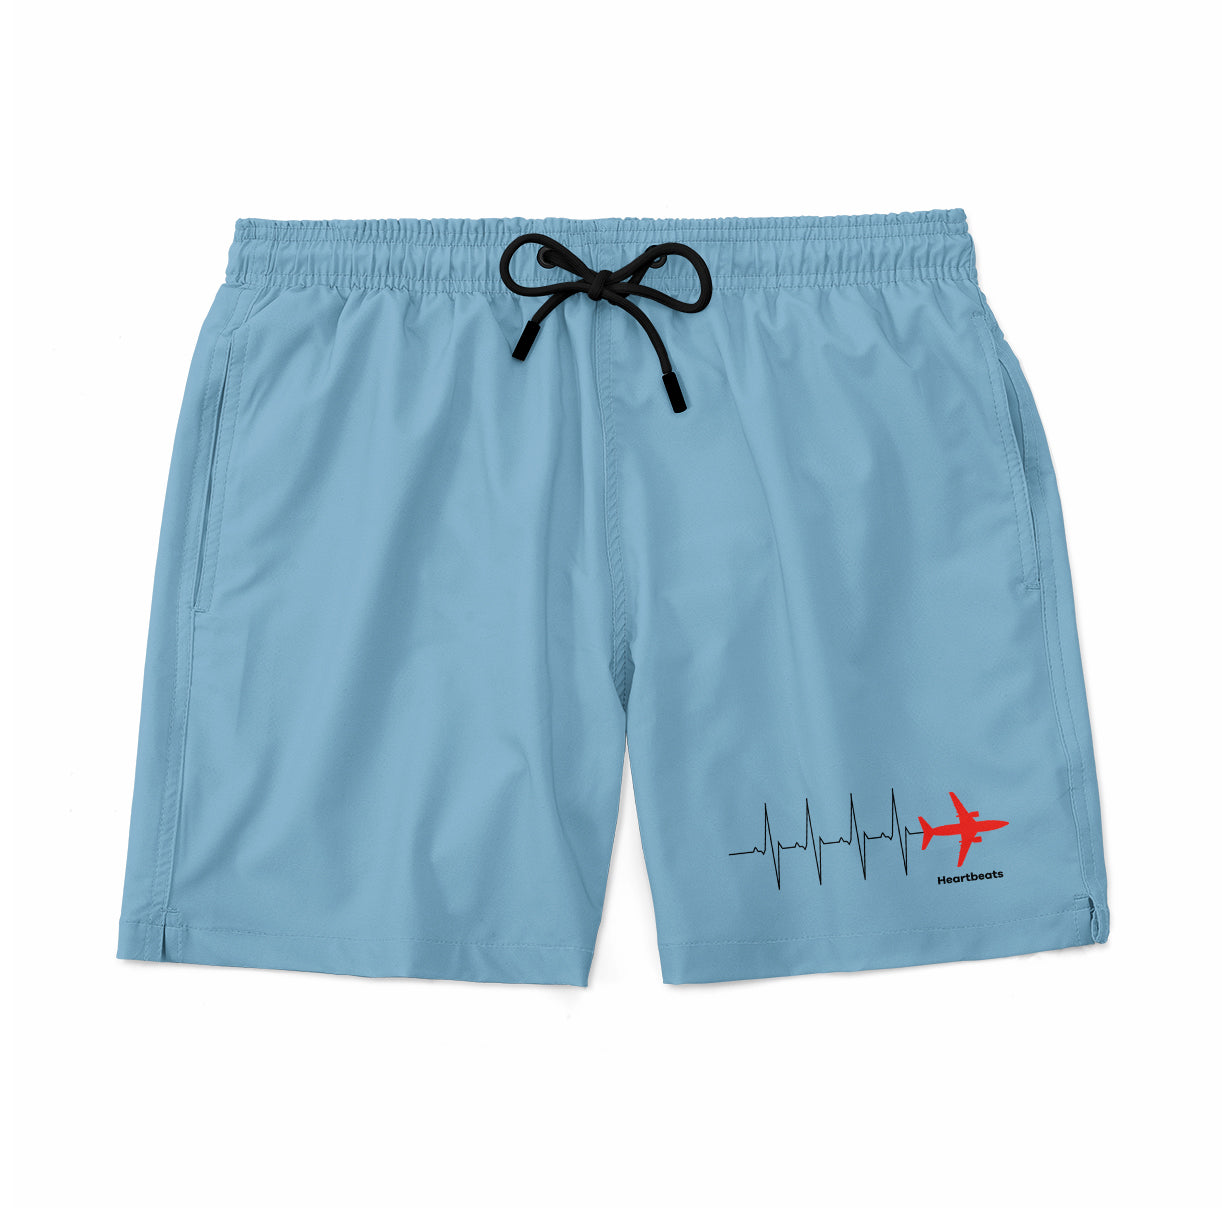 Aviation Heartbeats Designed Swim Trunks & Shorts